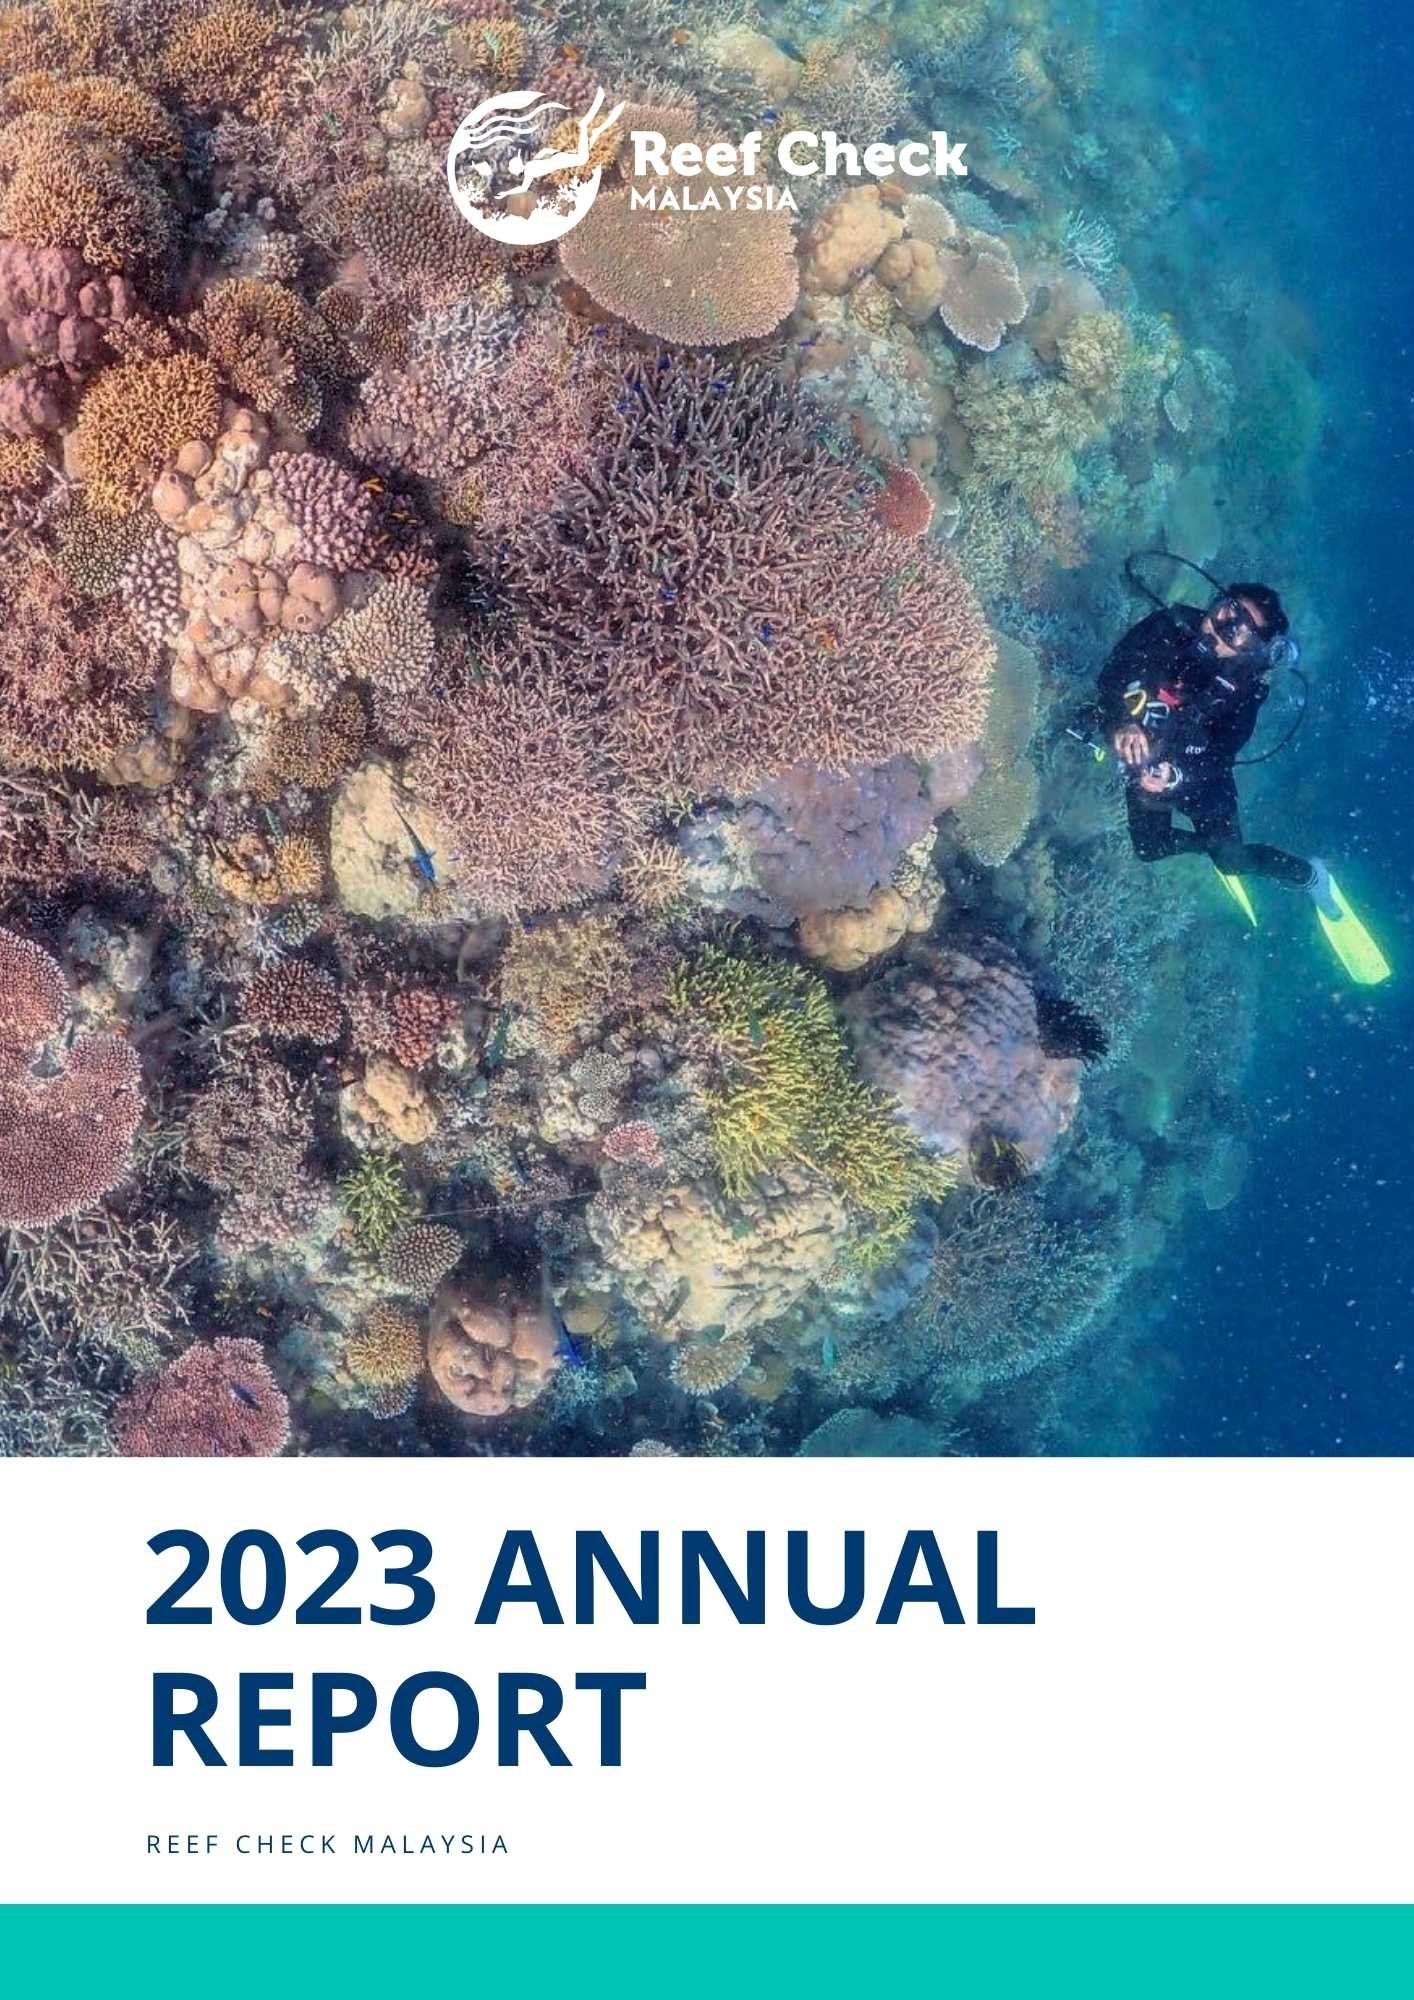 RCM Annual Report 2023 marine conservation (1).jpg